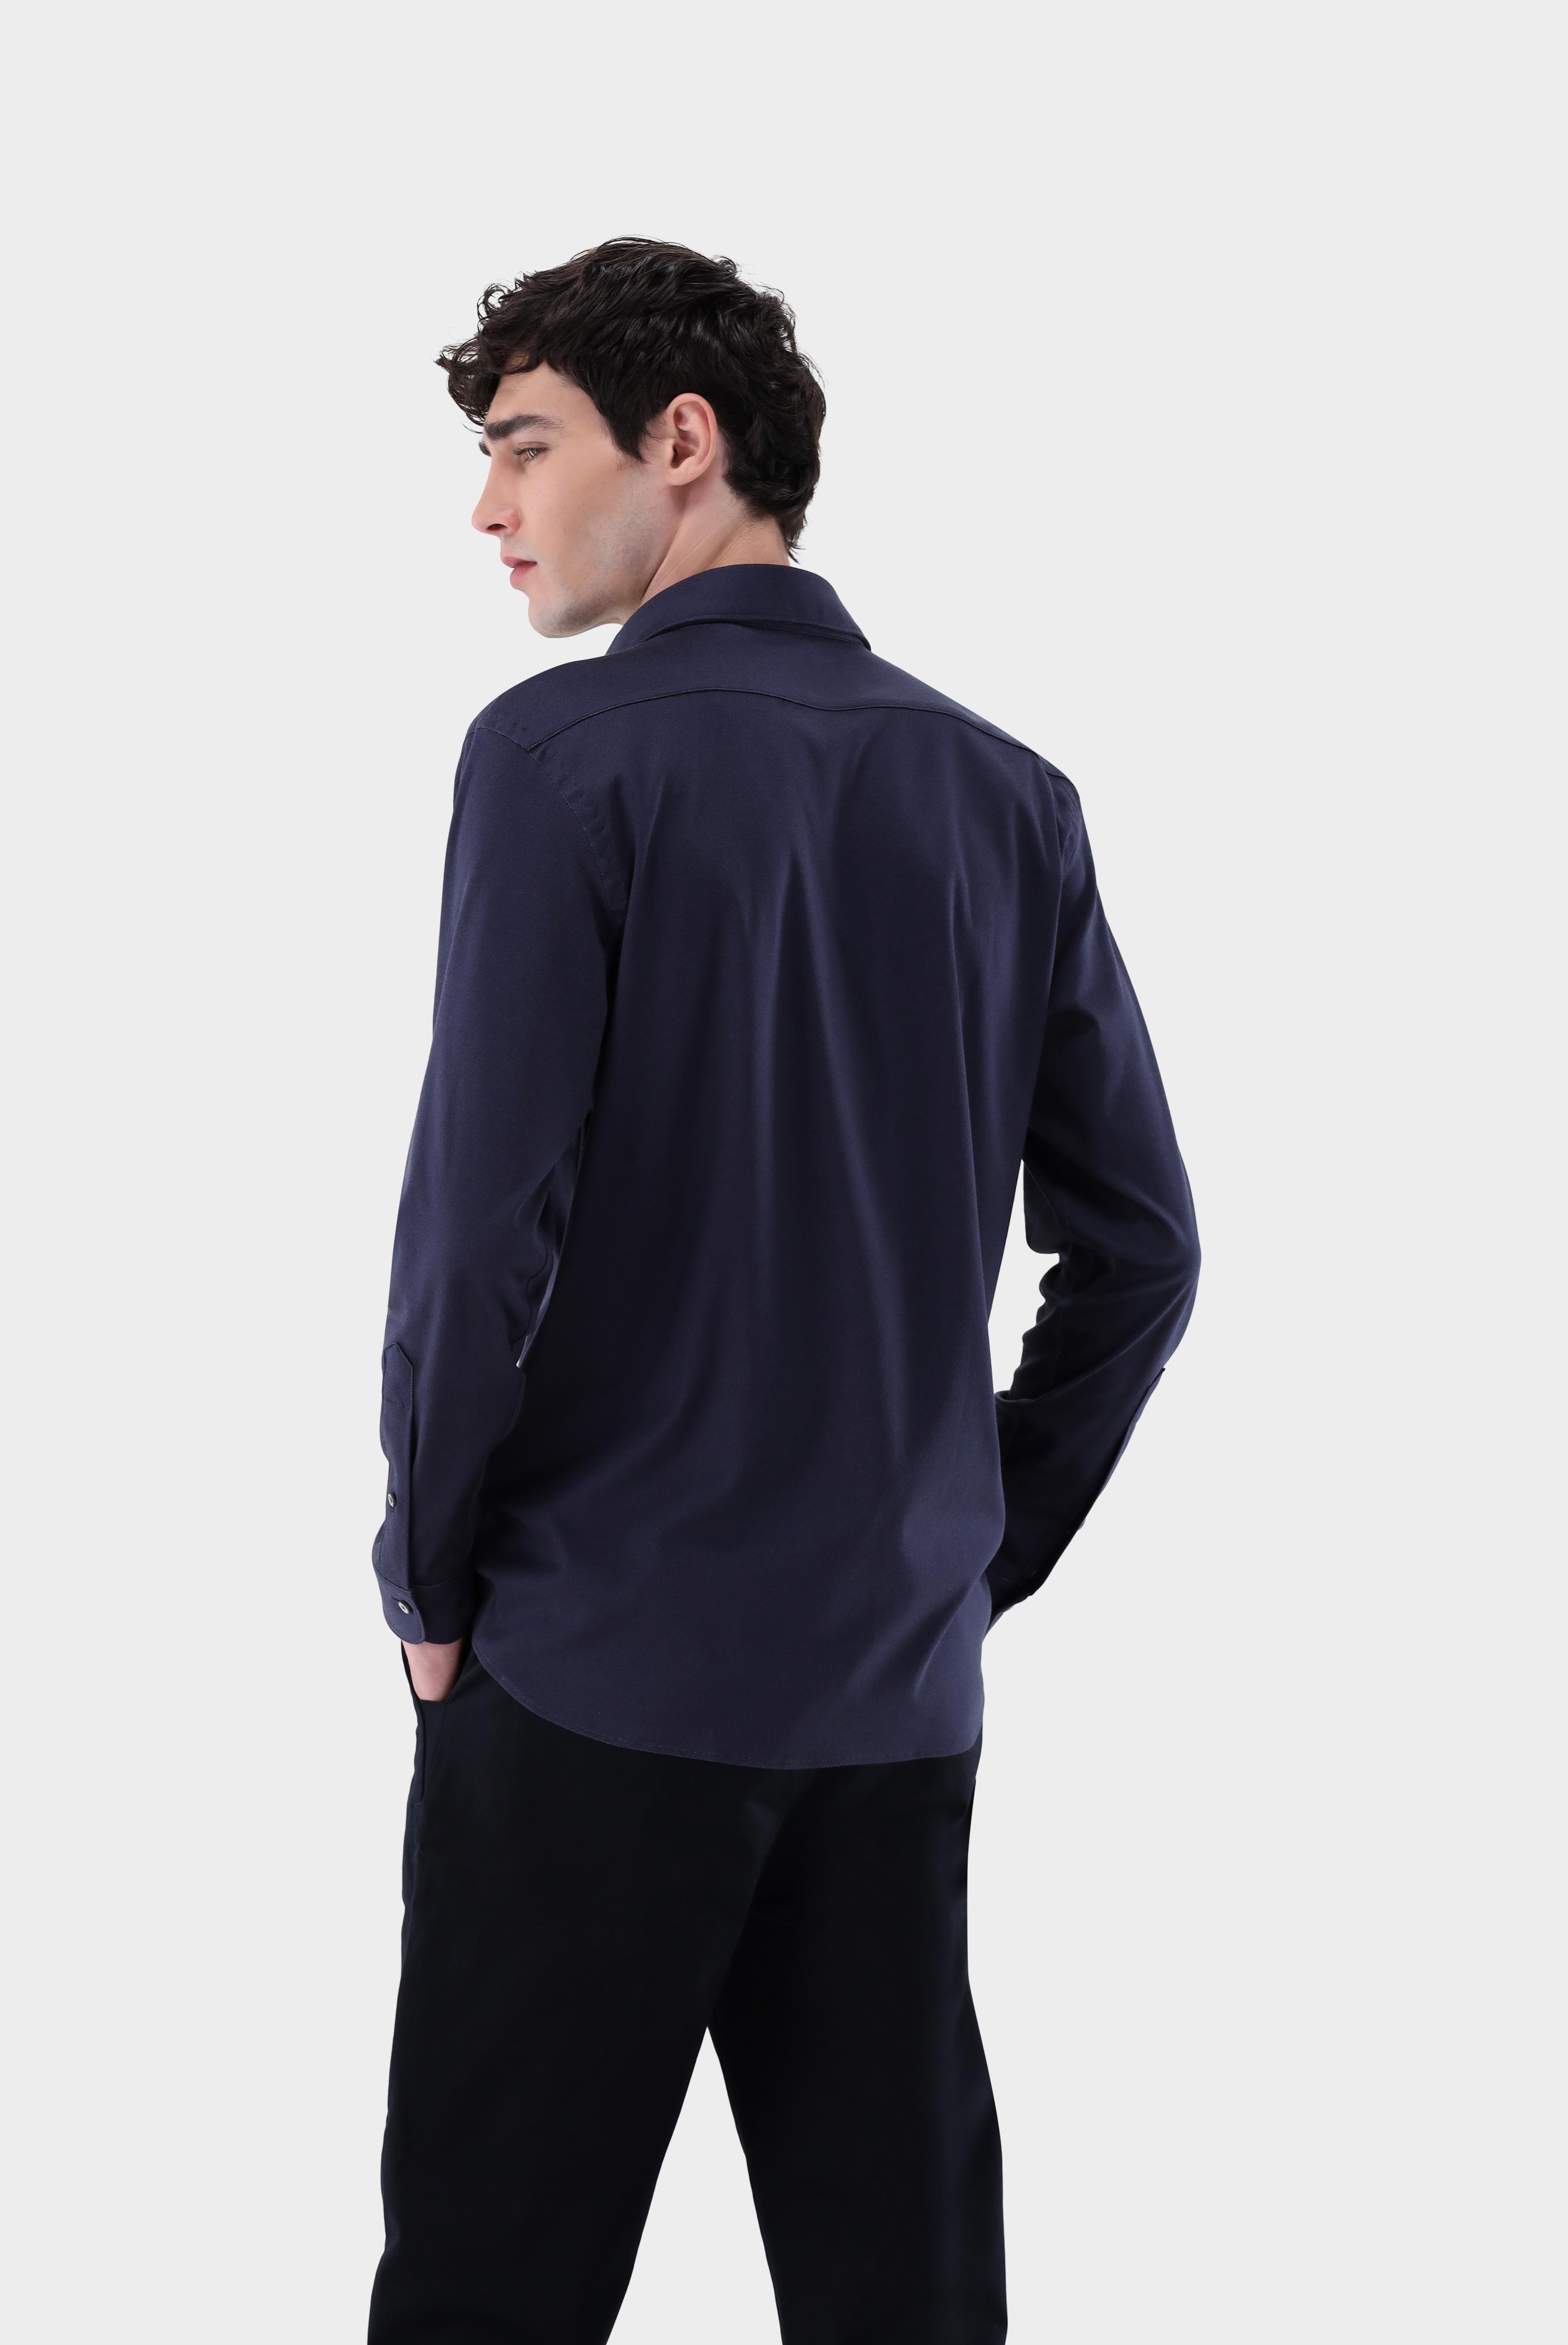 Casual Hemden+Jersey Hemd mit Twill Druck Tailor Fit+20.1683.UC.187749.690.M